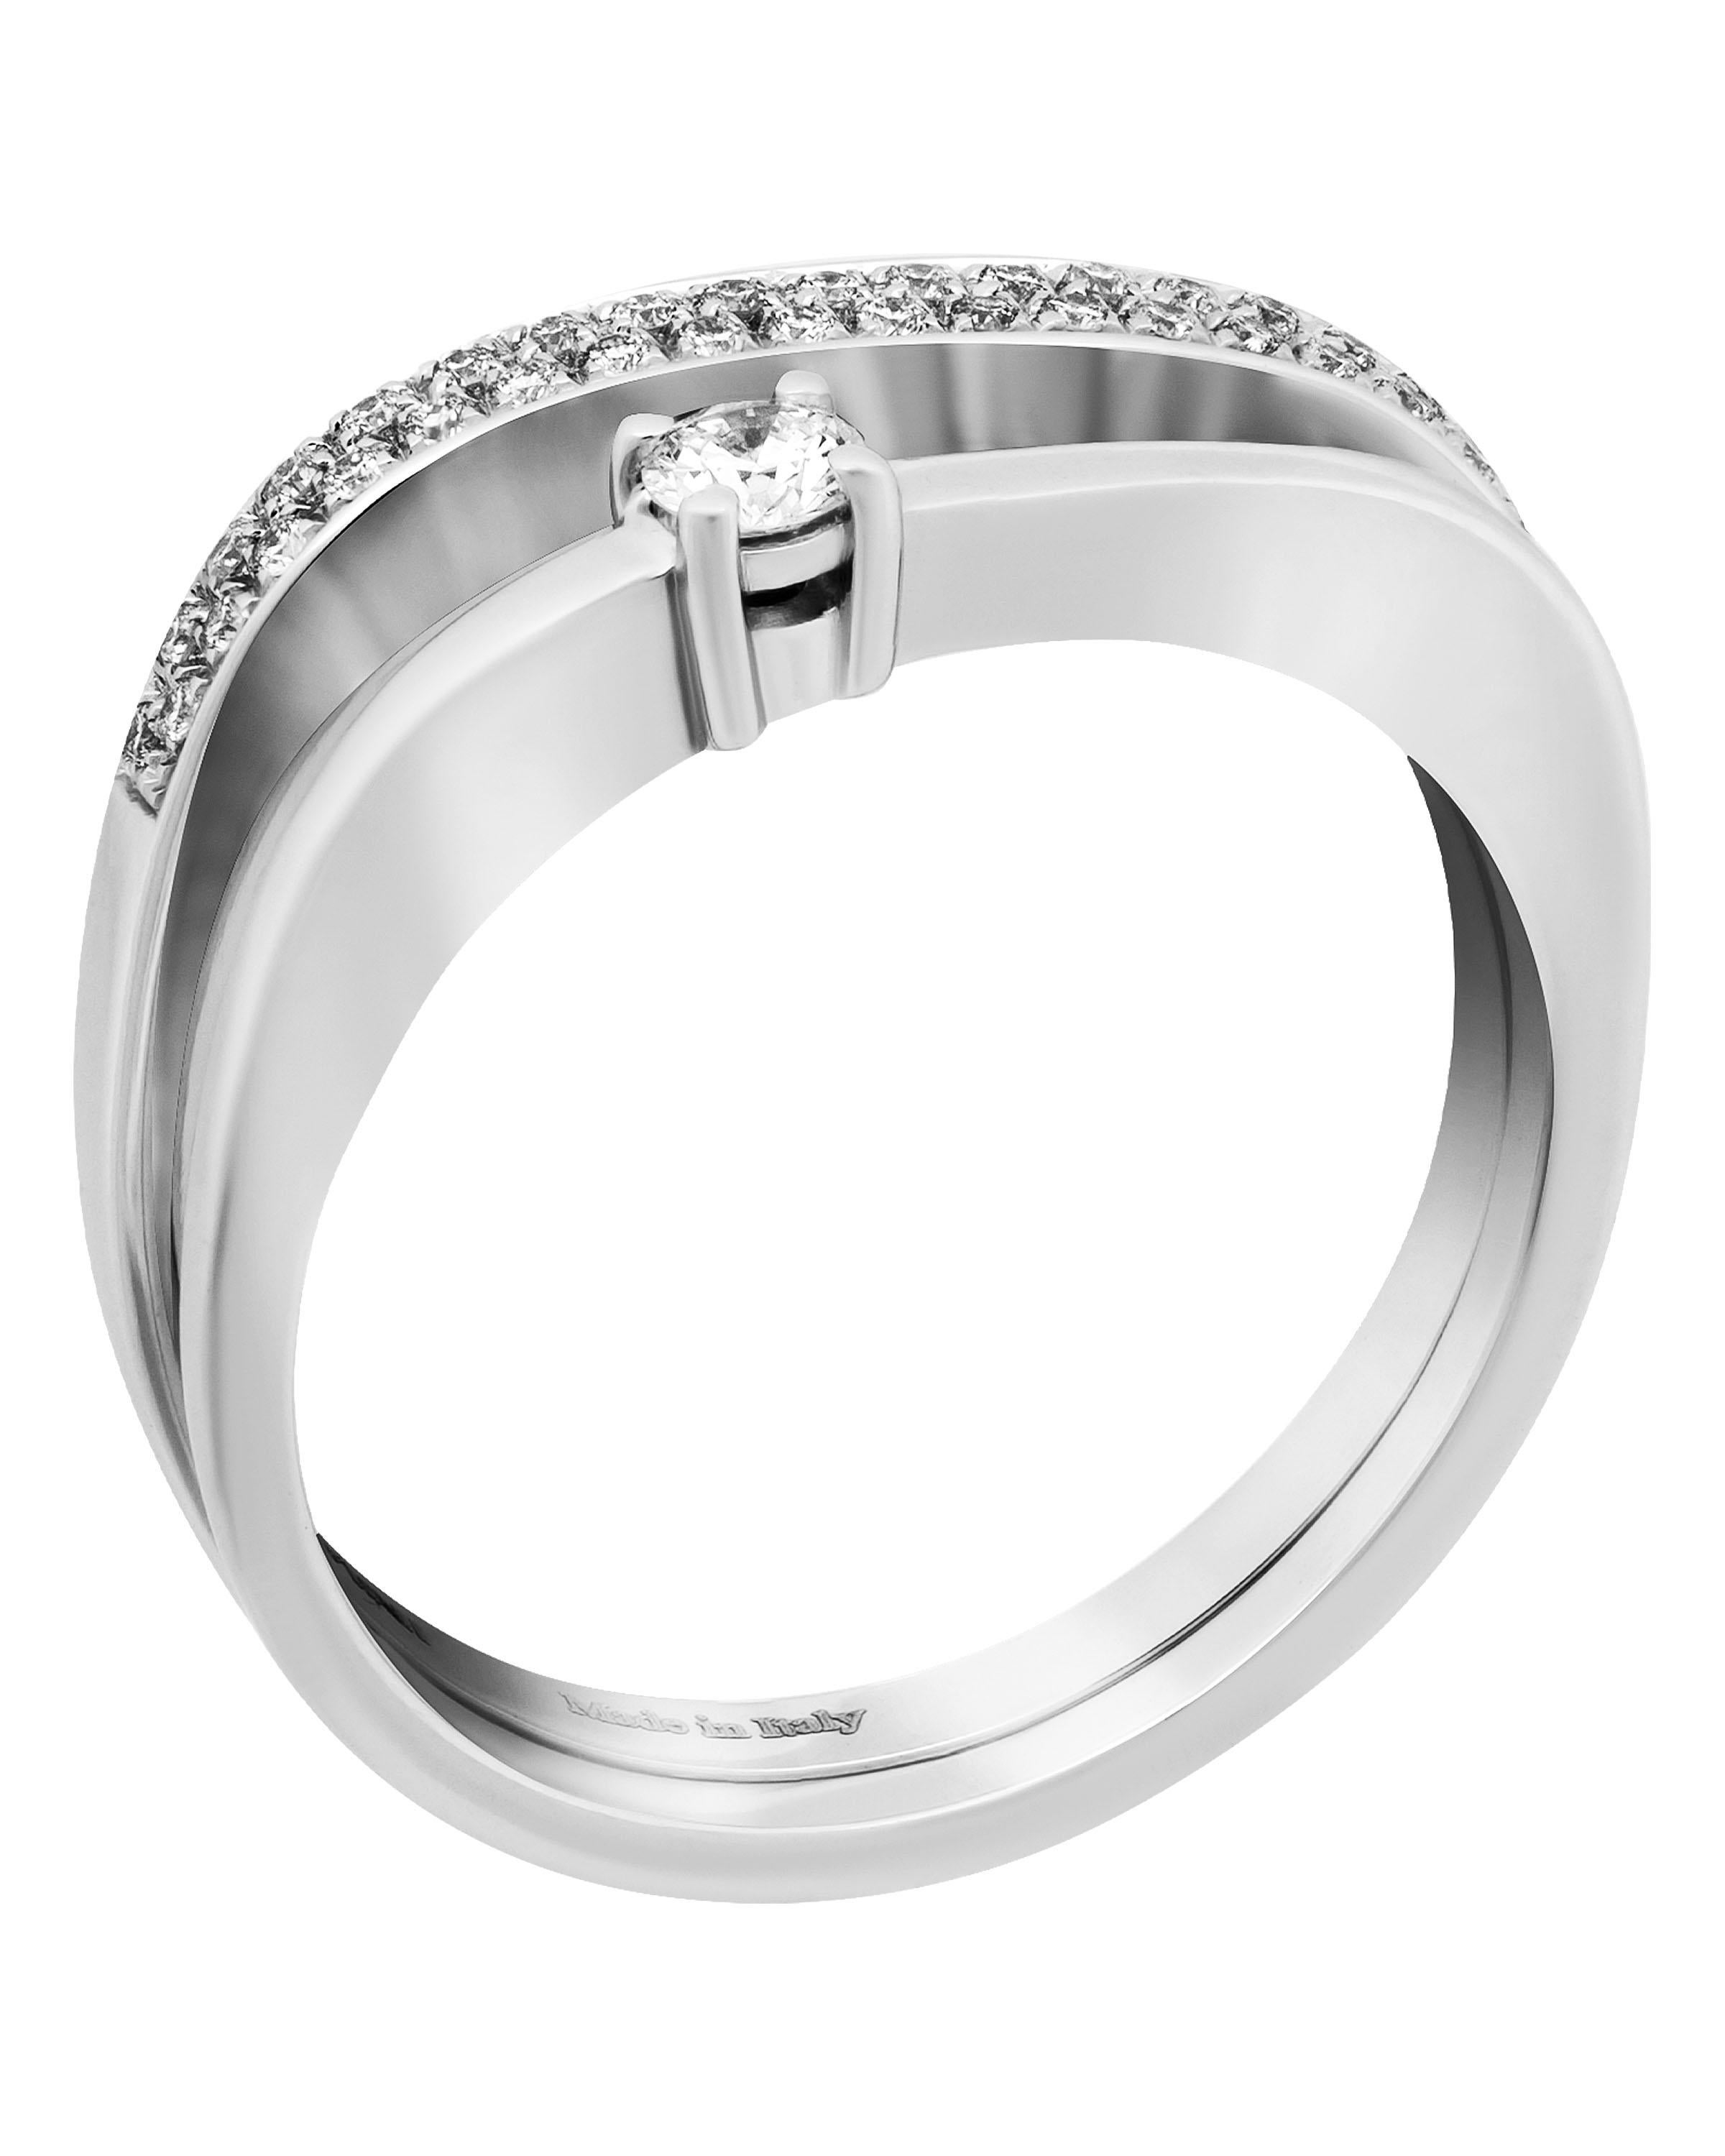 Contemporary SALVINI 18K White Gold, Diamond Band Ring sz 6.5 For Sale